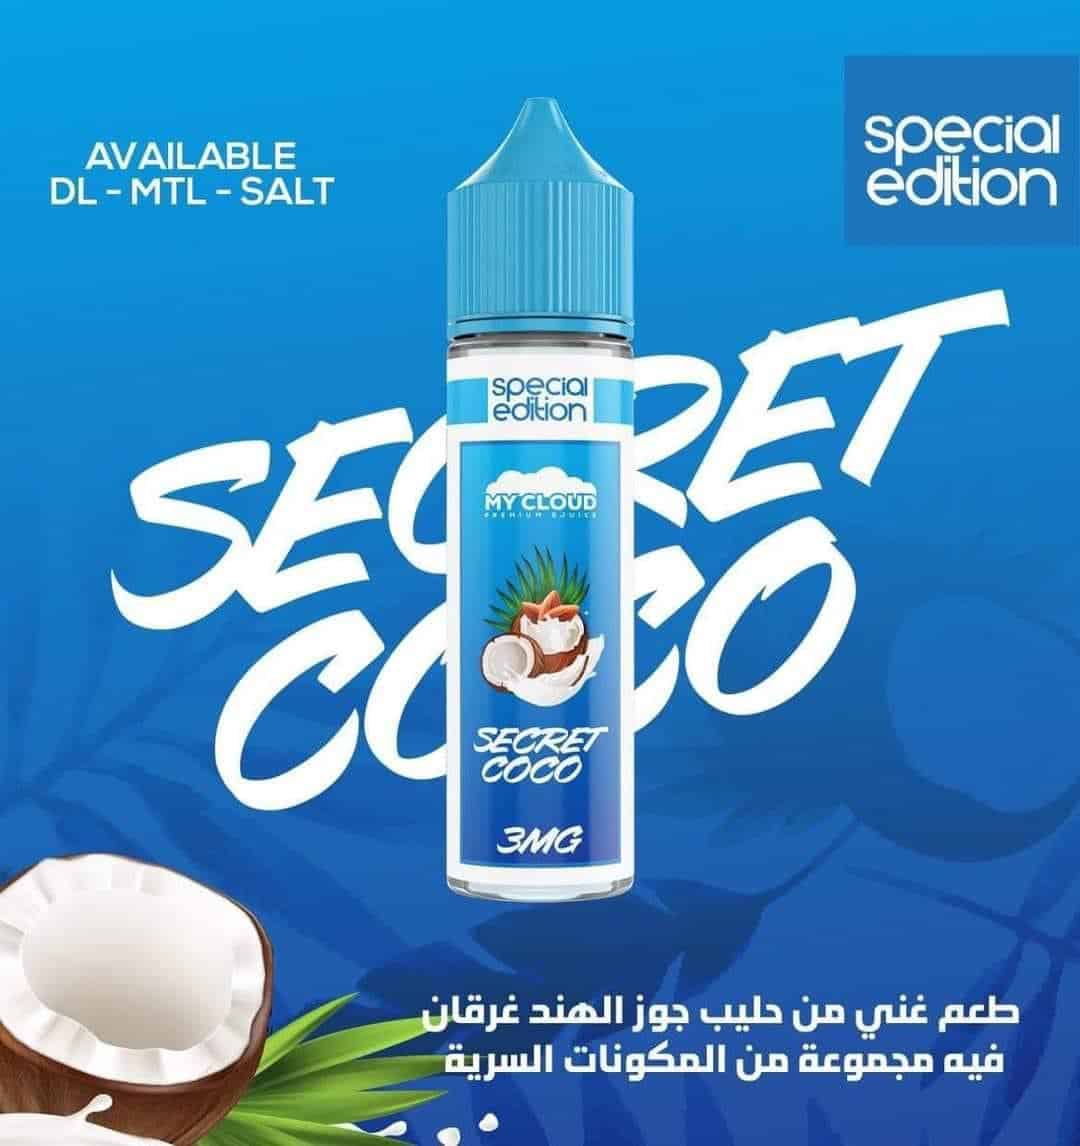 MY CLOUD SECRET COCO SPECIAL EDITION E-LIQUID